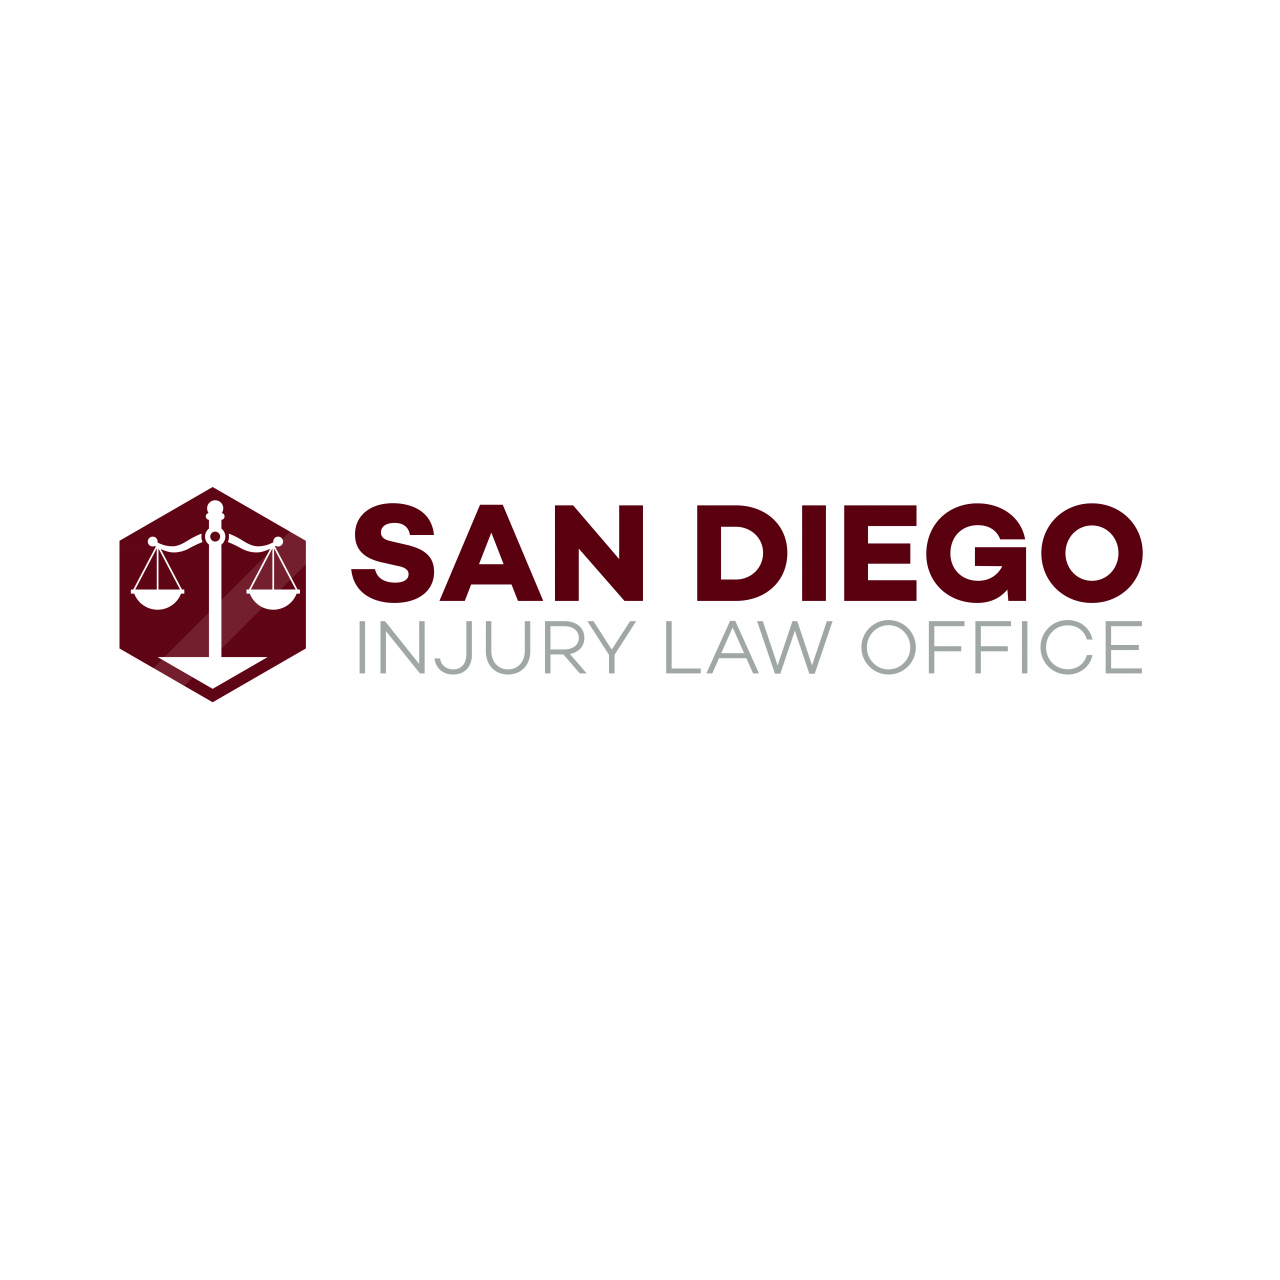 San Diego Injury Law Office logo